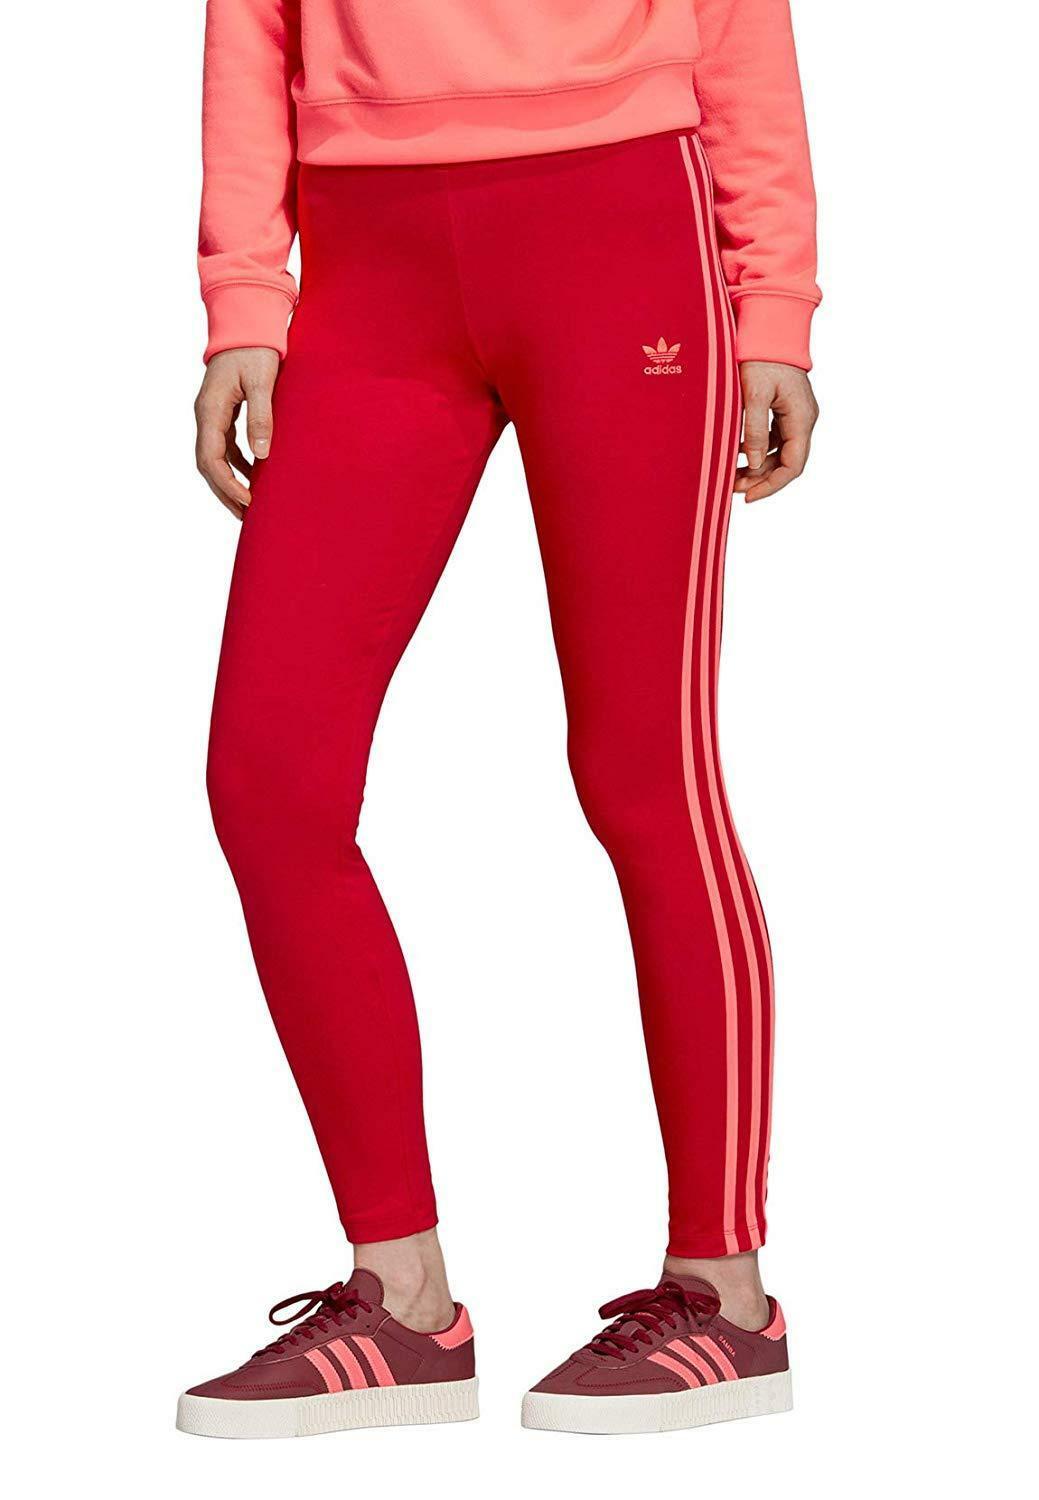 Adidas 3str tight leggings donna rossi ed7577